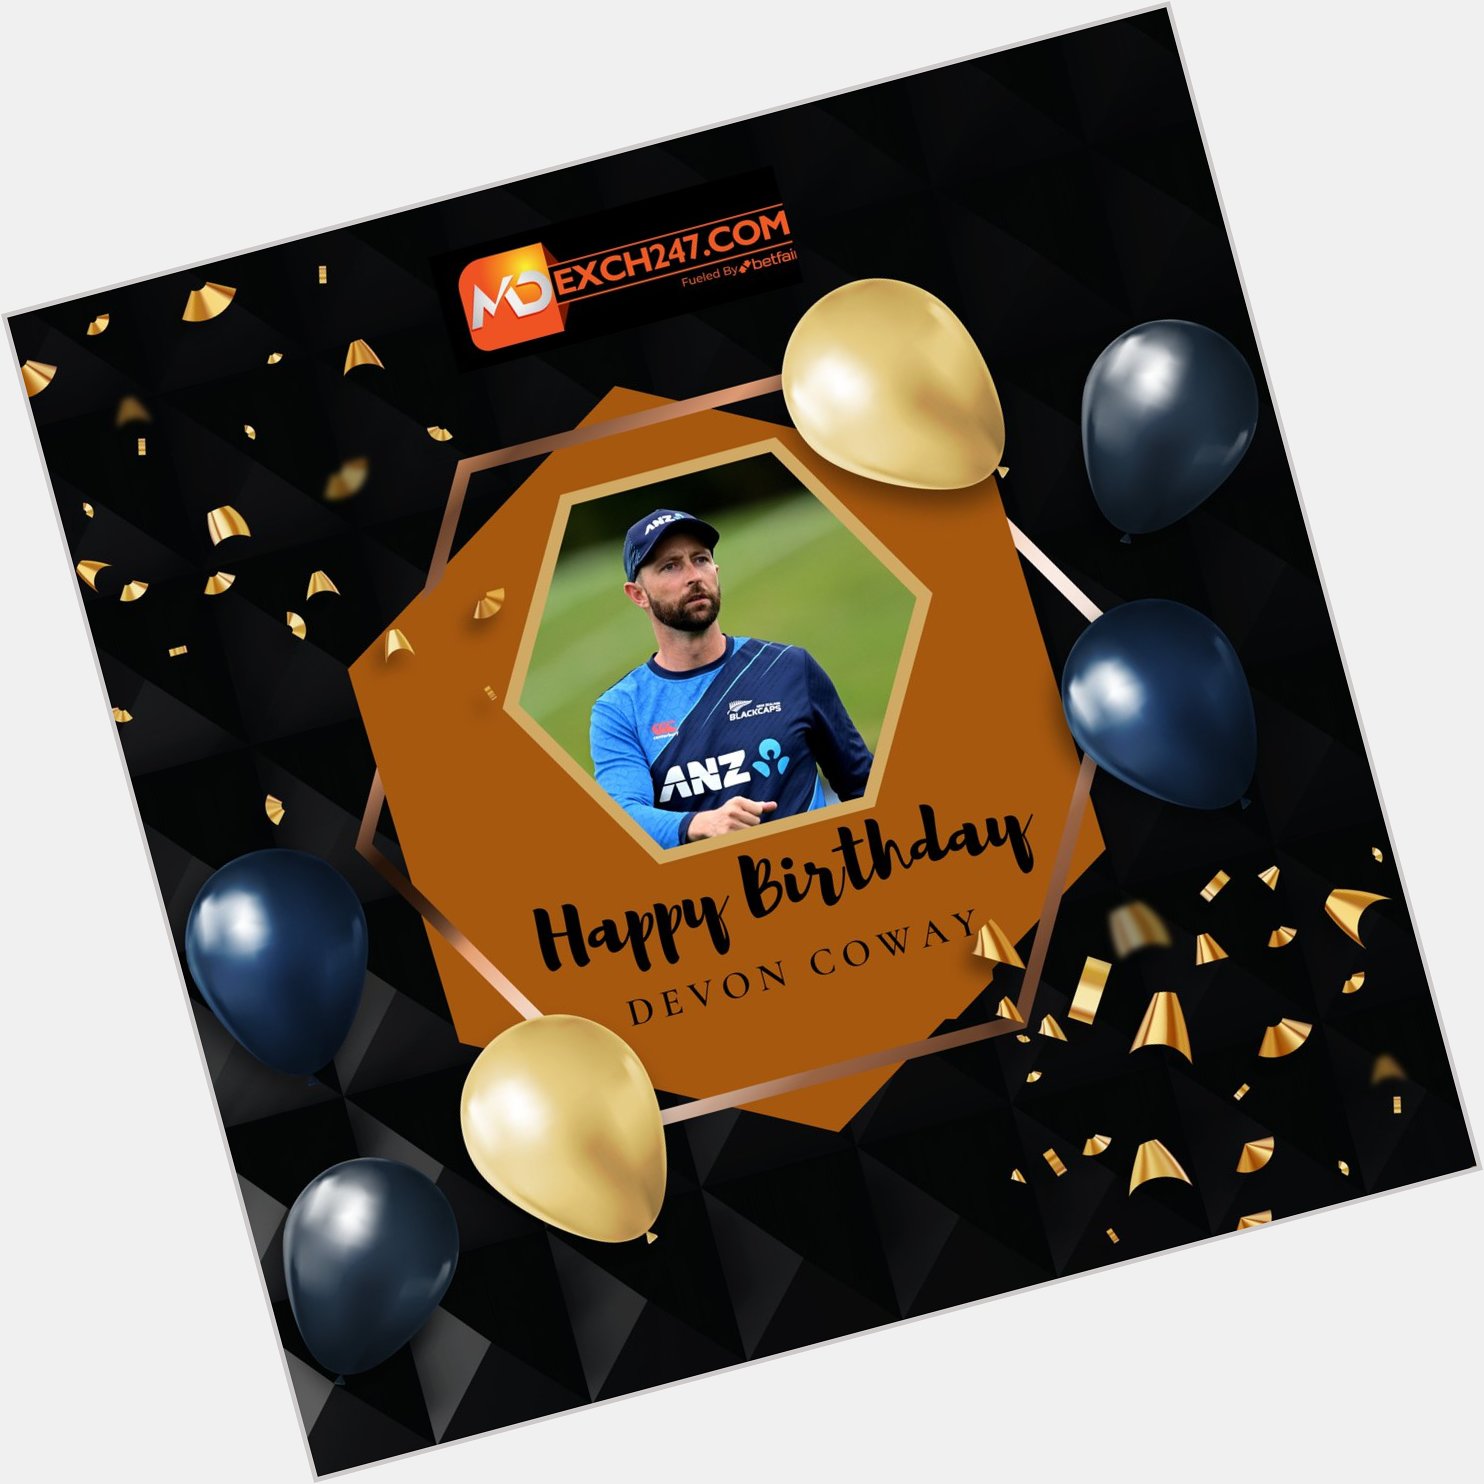  Happy Birthday to cricketers  Devon Conway Saurav Ganguly Baba Aparajith Baba Indrajith 